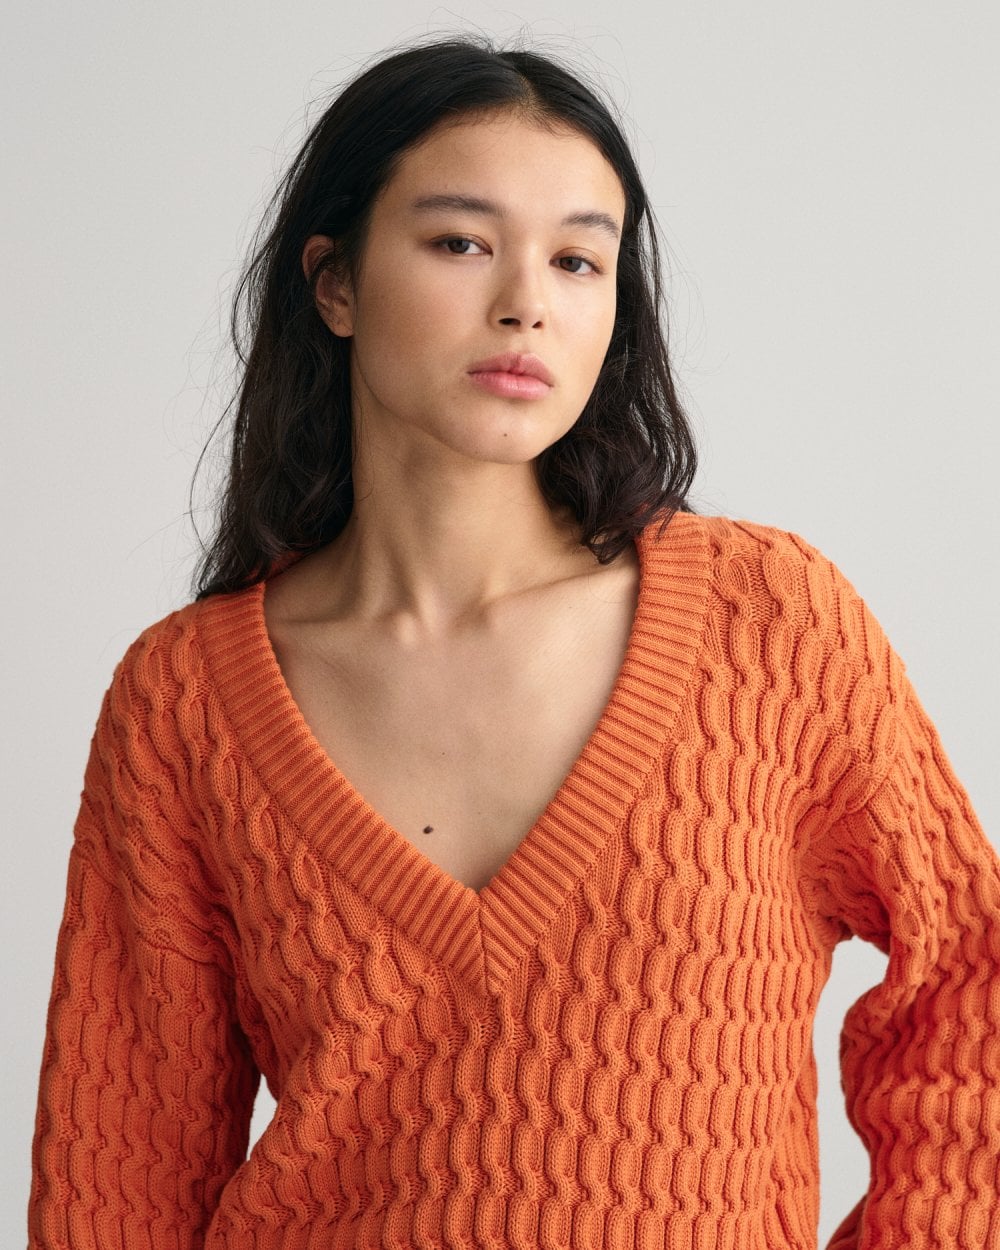 Textured Cotton V-Neck Sweater